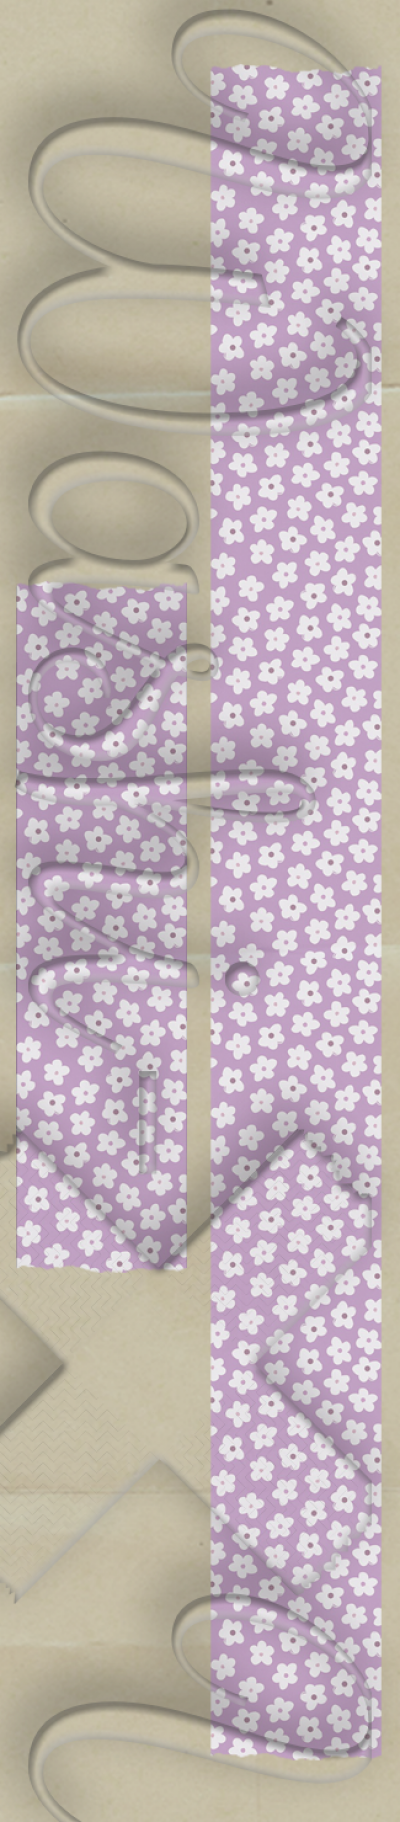 Purple-white flowers patterned washi tape